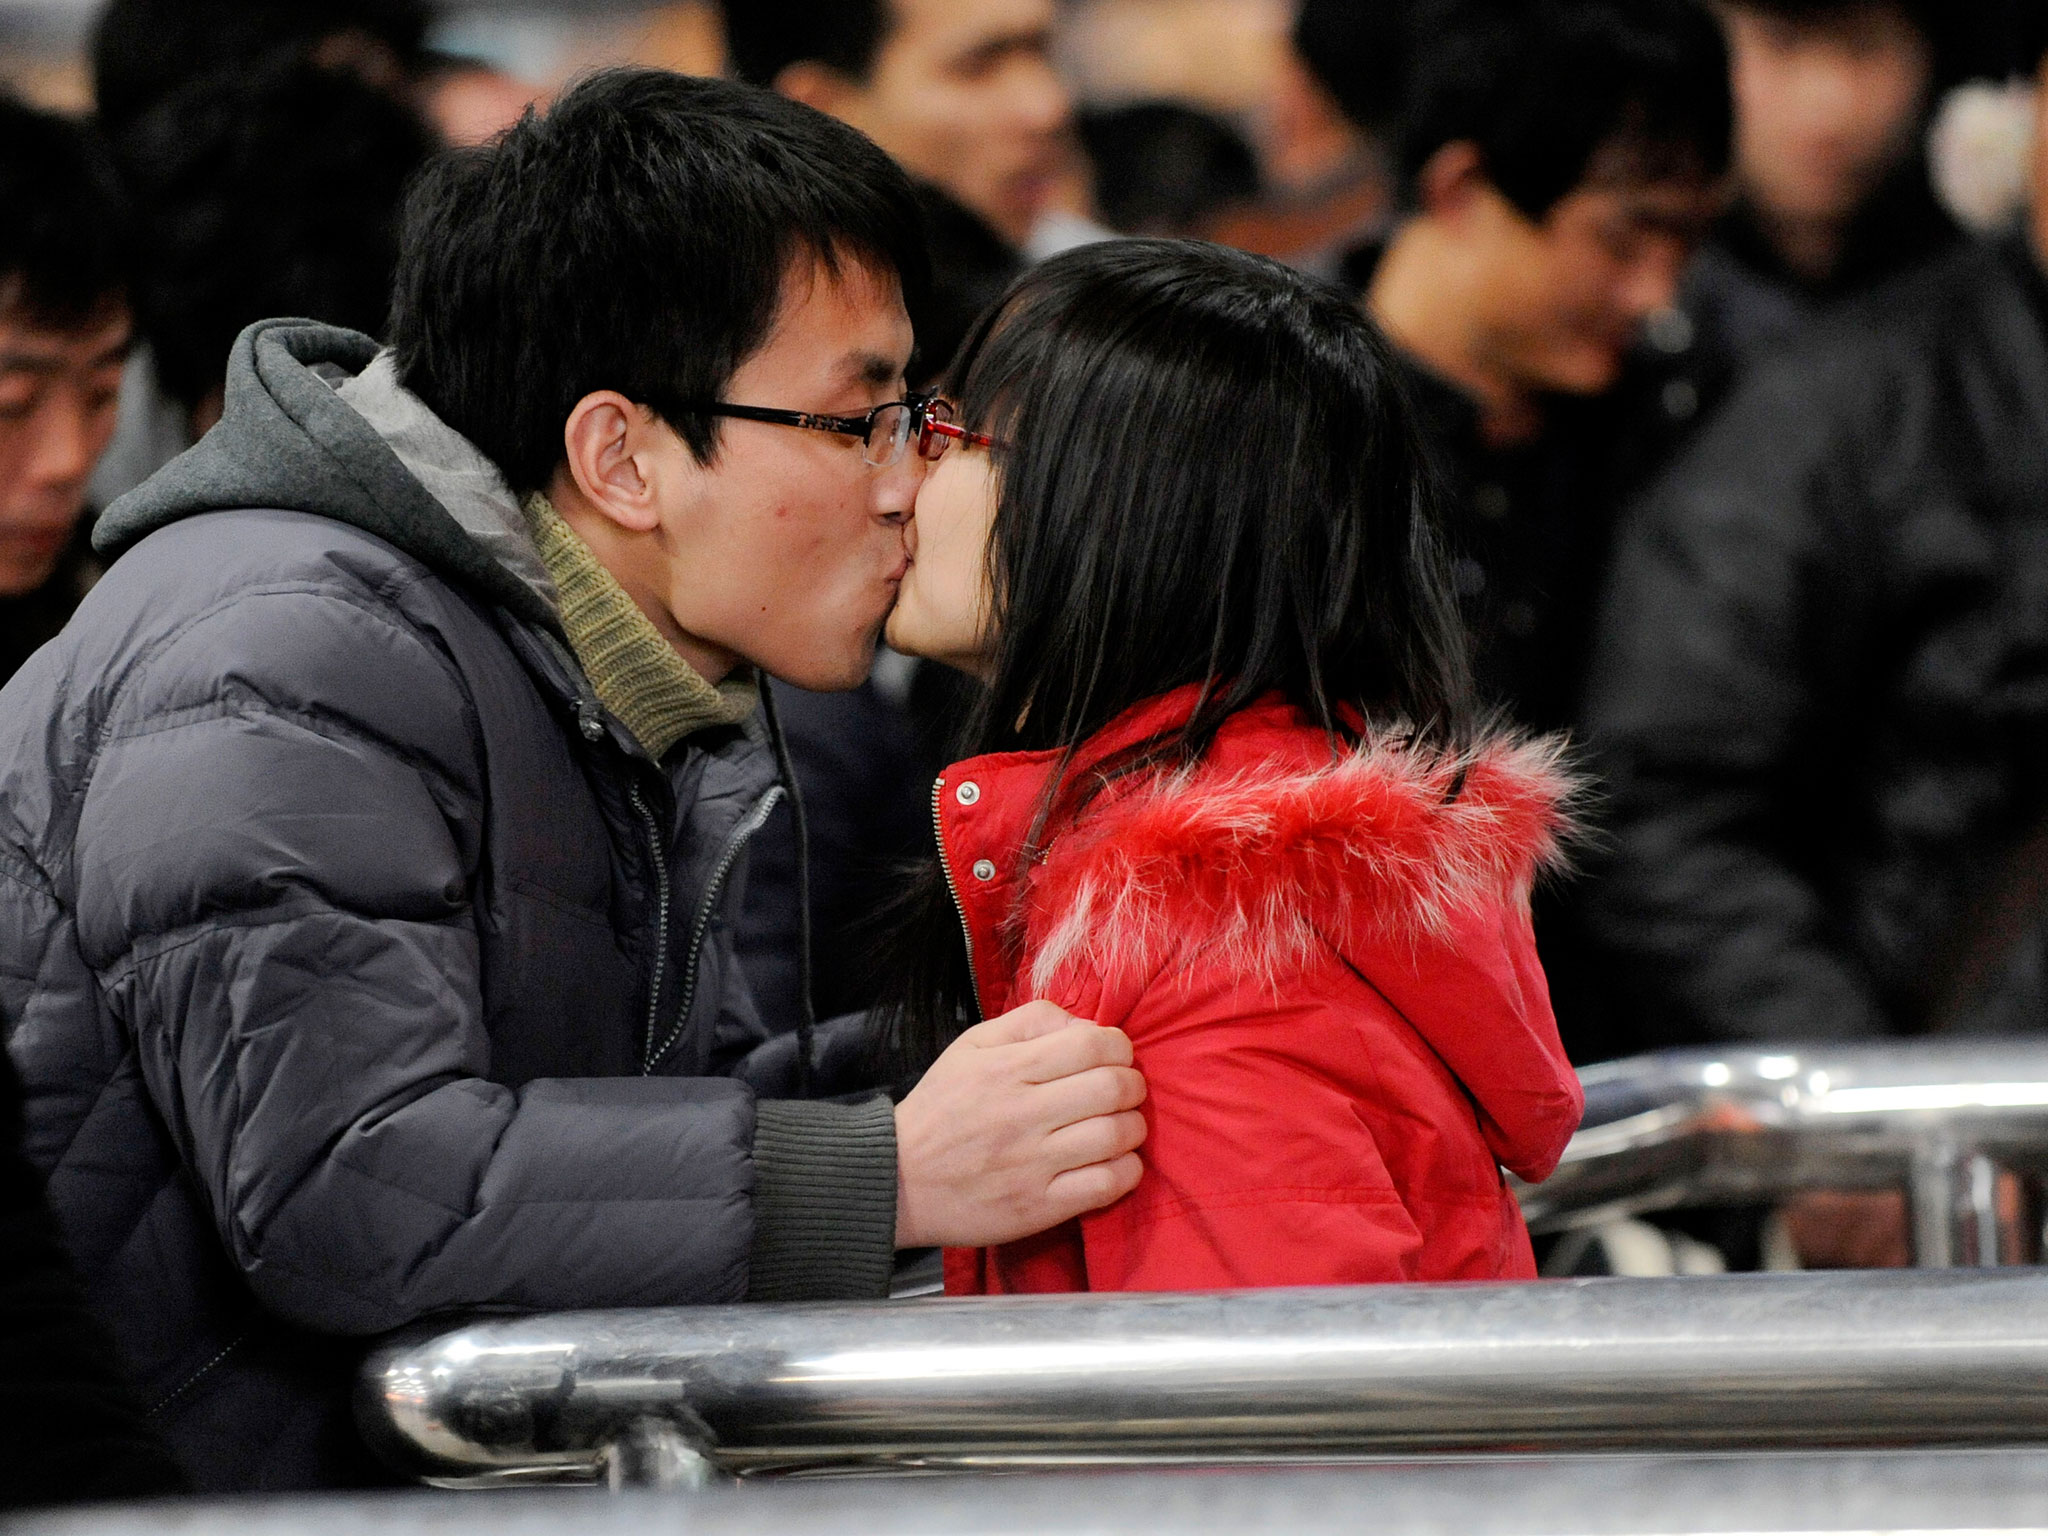  Universidad china imparte clases para encontrar pareja